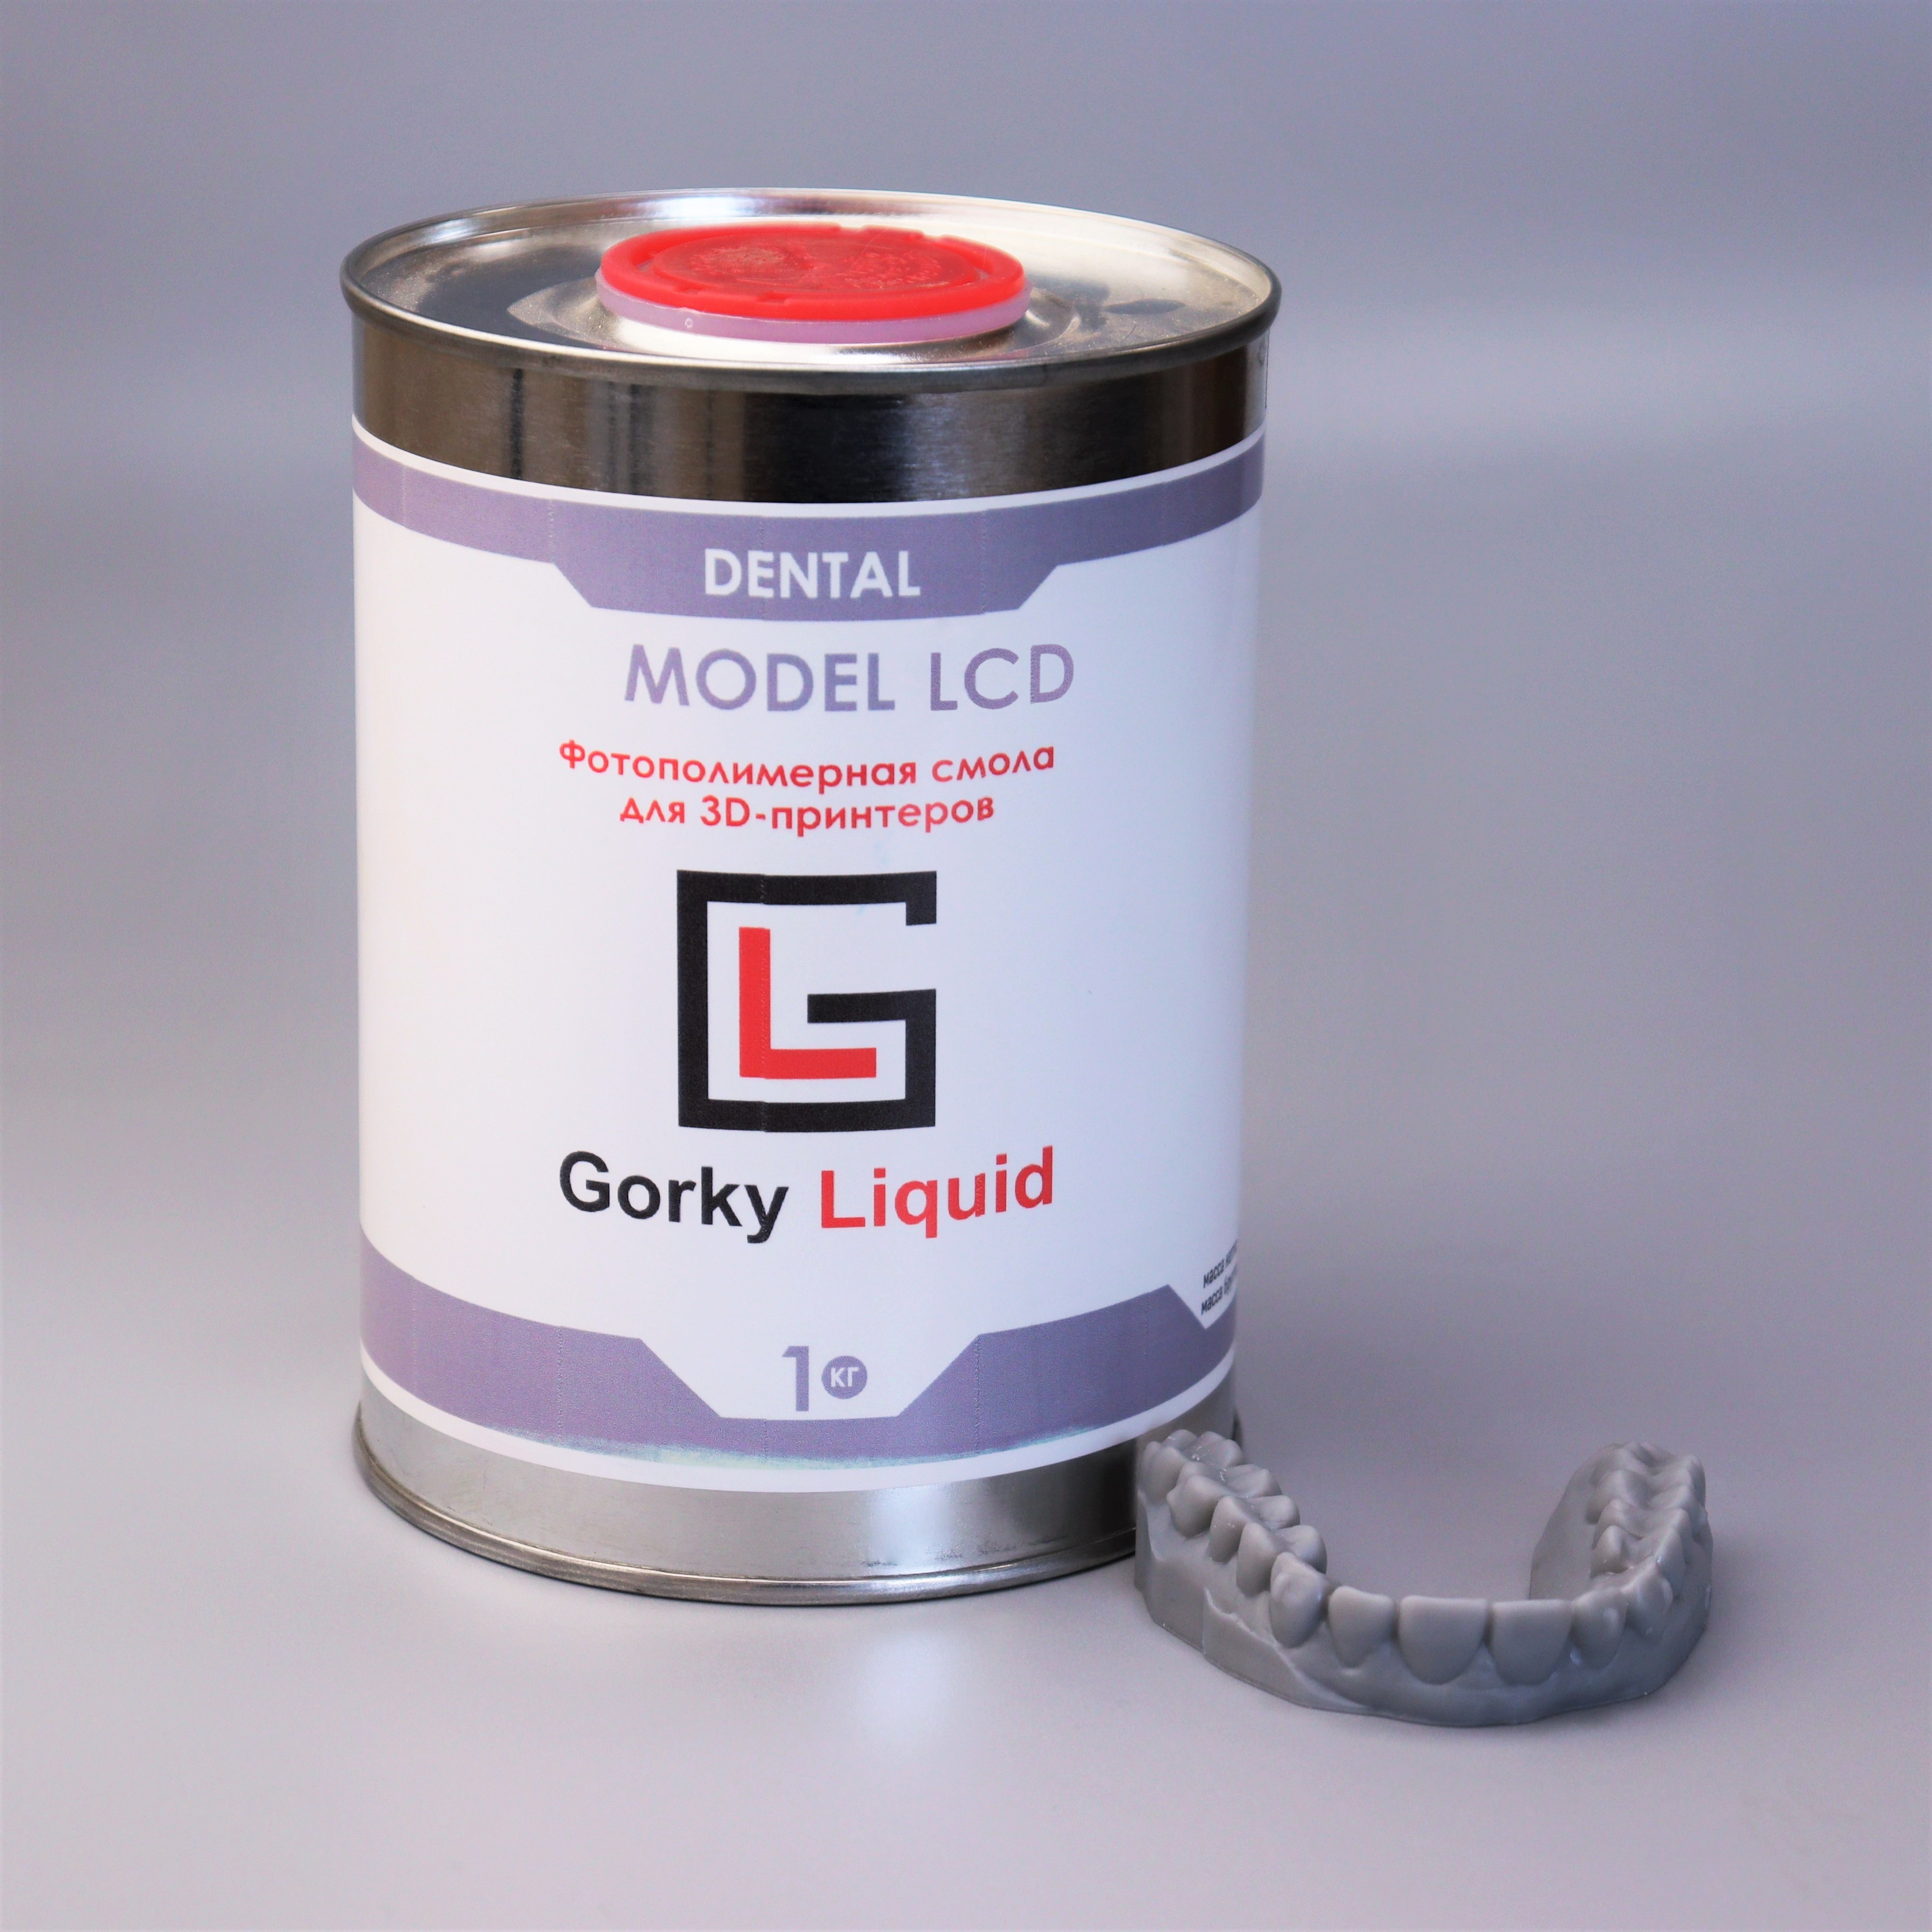 "Dental Model" LCD/DLP Gray 1 кг фотополимерная смола "Gorky Liquid "